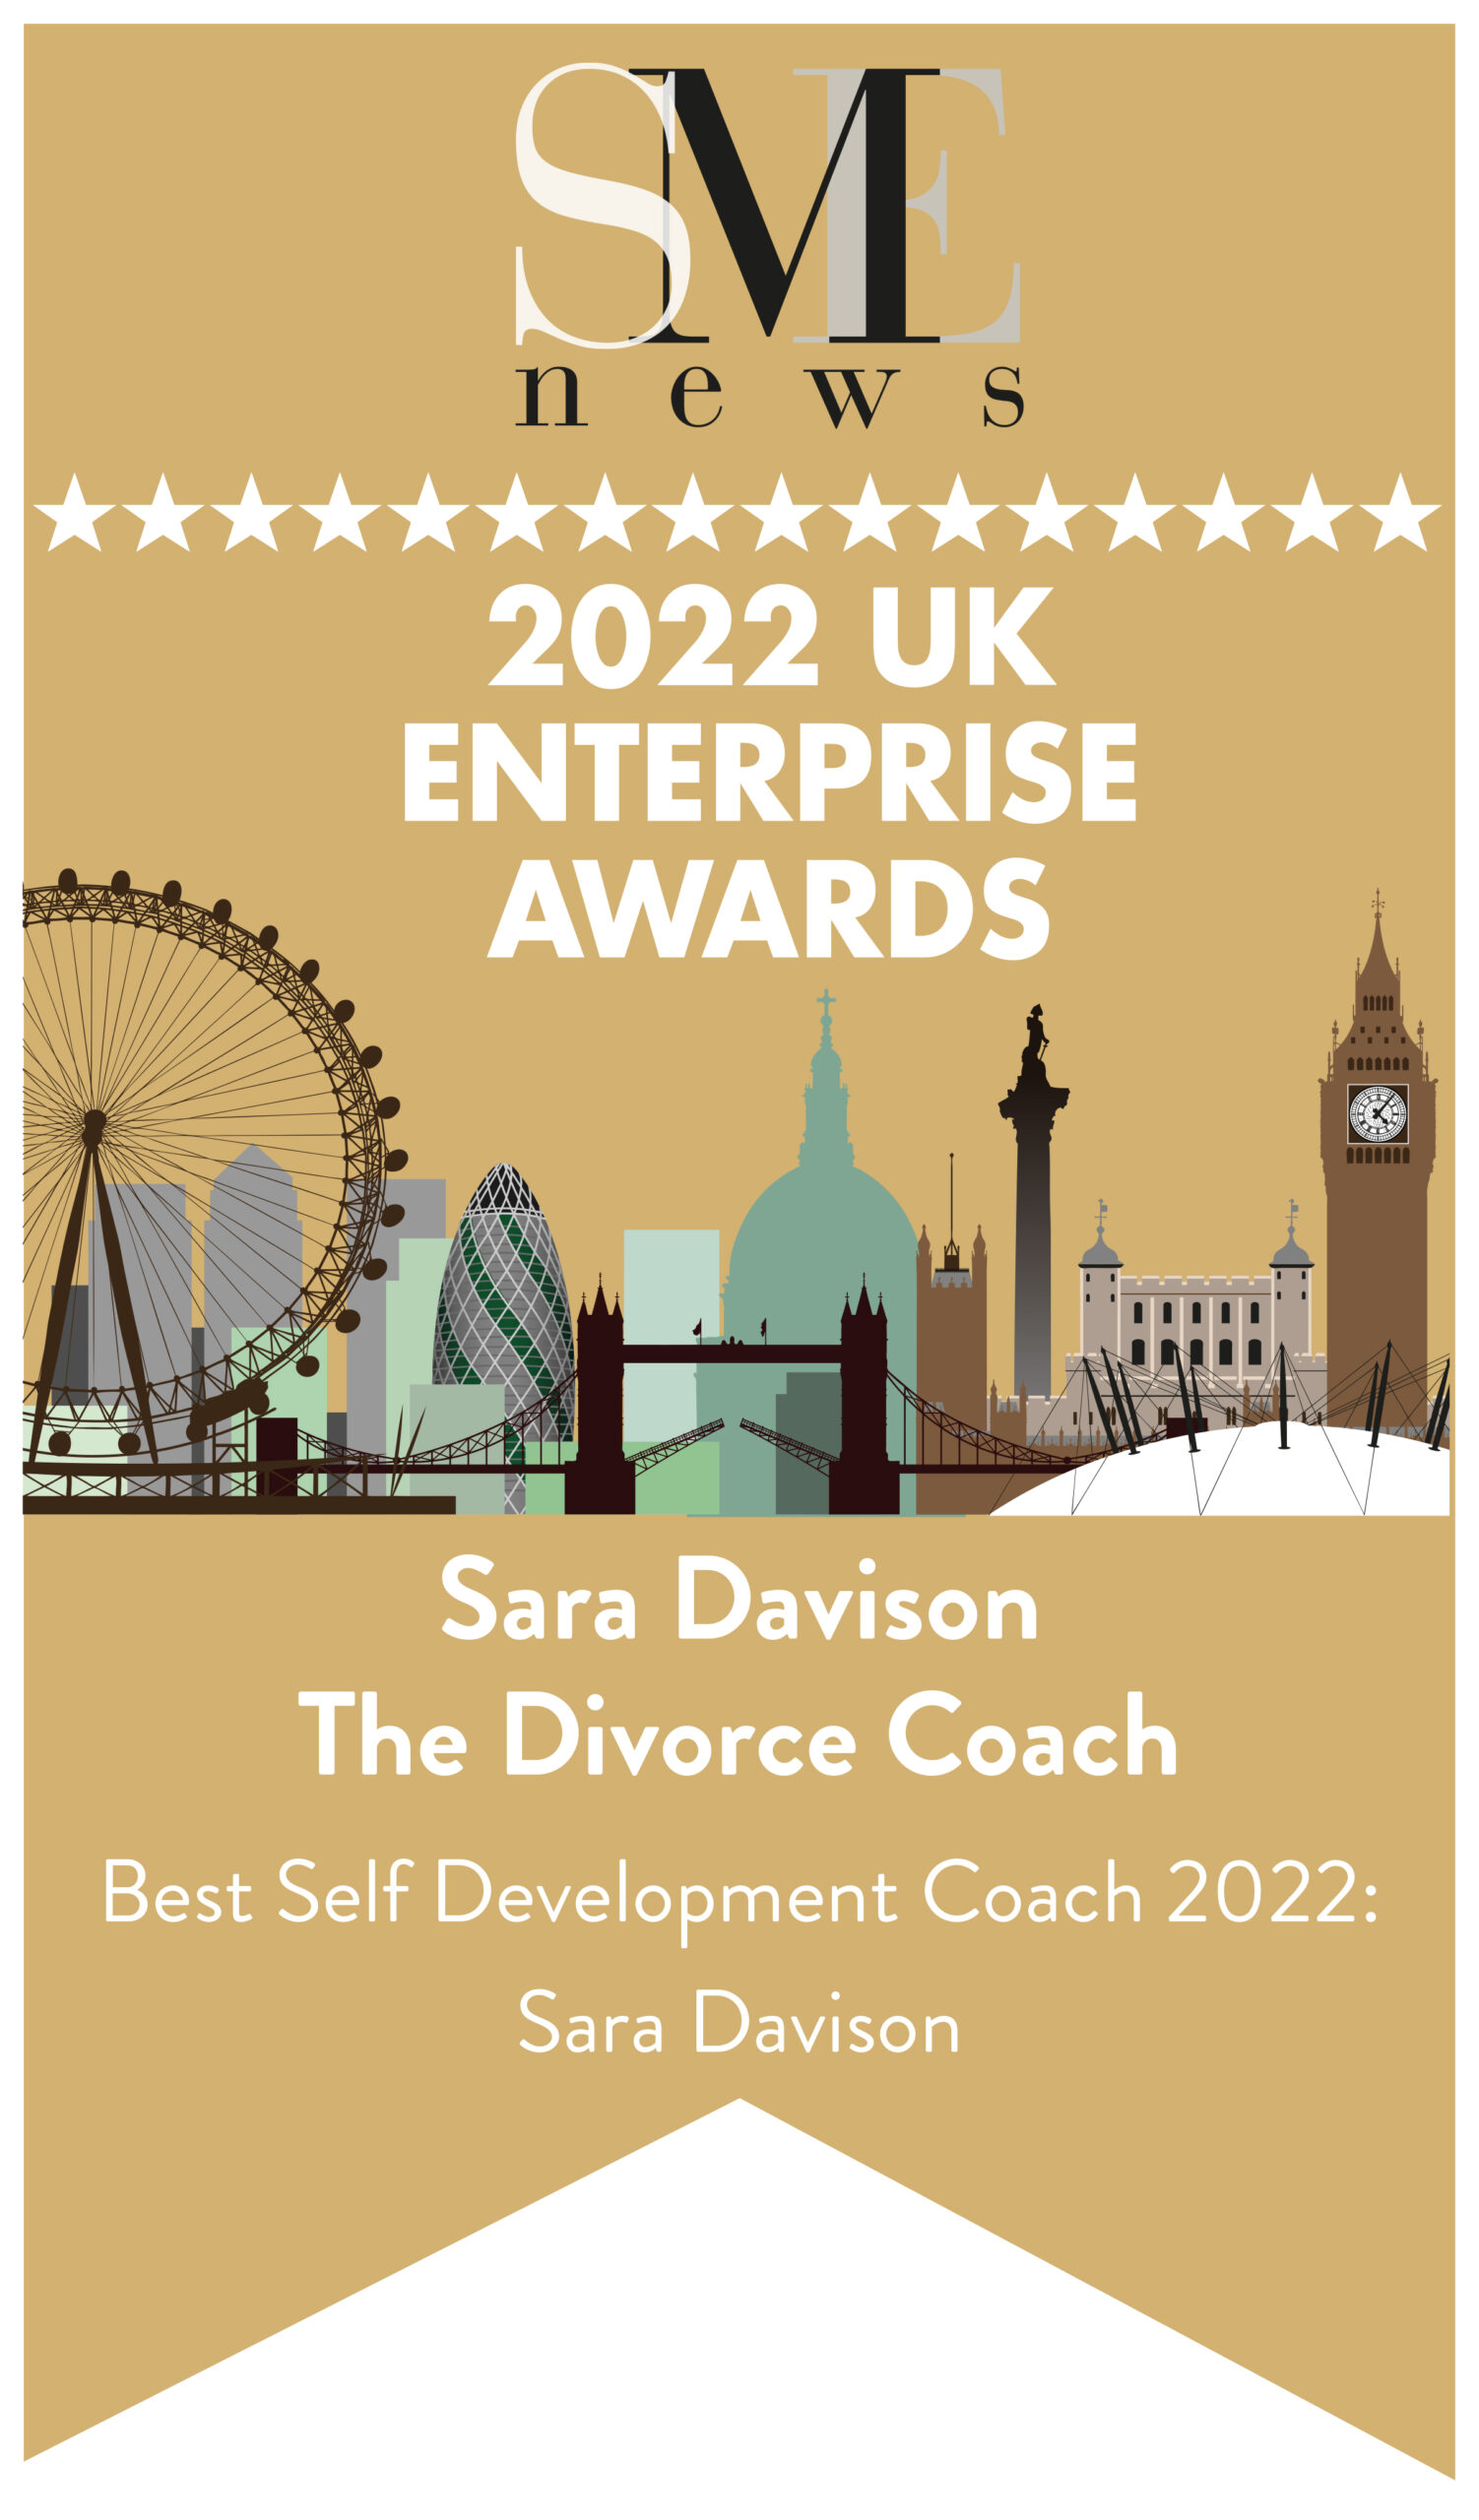 May22089 - Sara Davison - The Support Coach - SME UK Enterprise